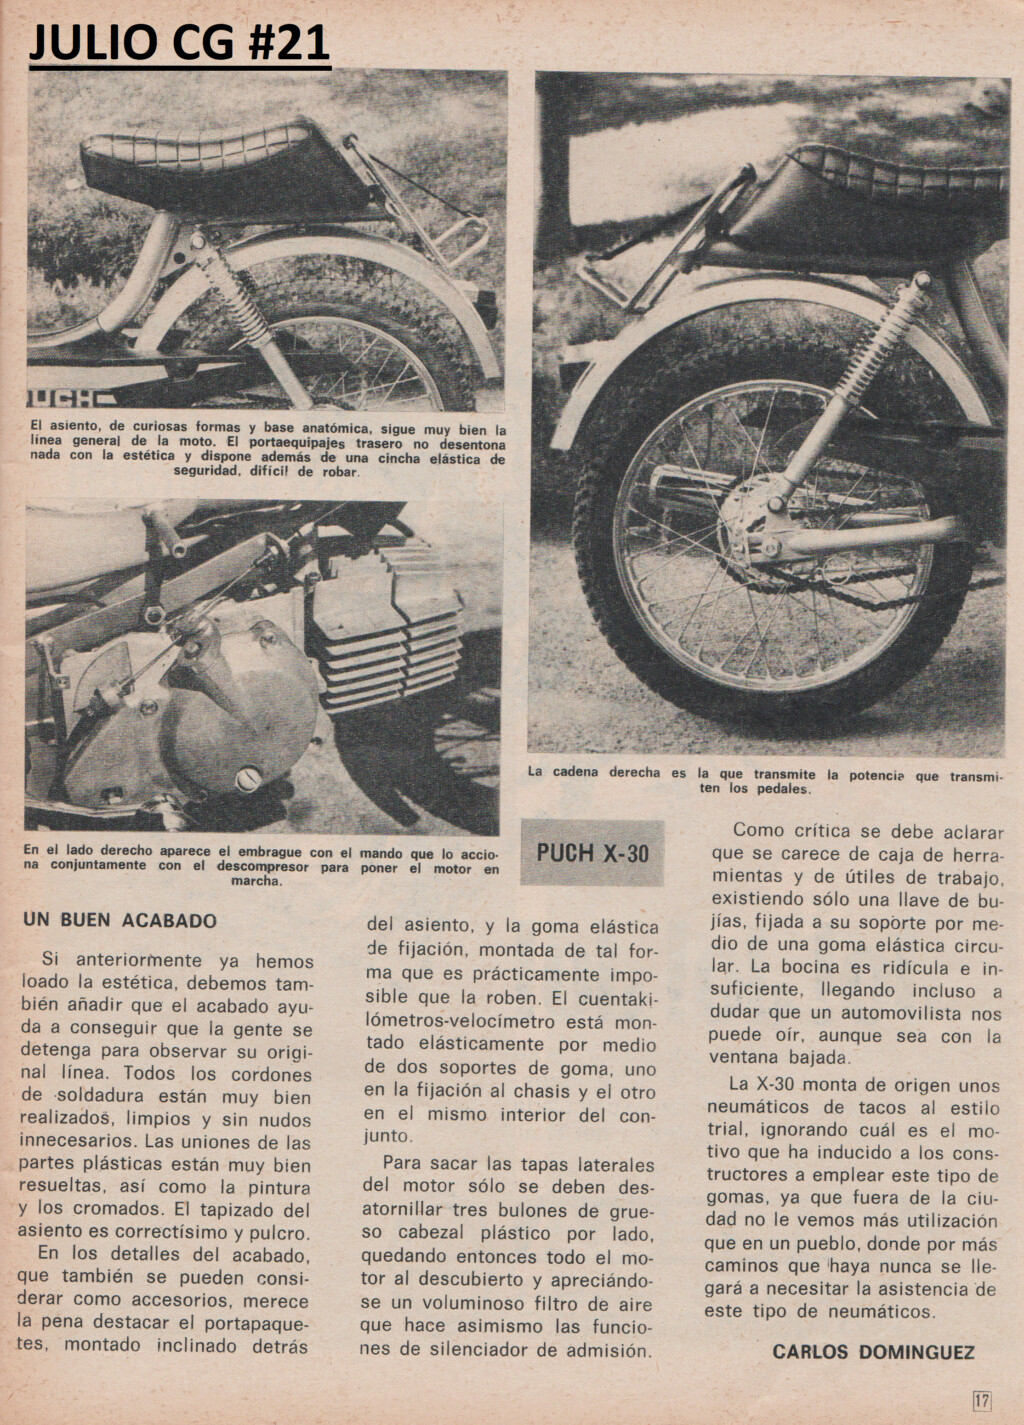 PUCH X30  Motociclismo  segunda quincena julio 1975 Escze339